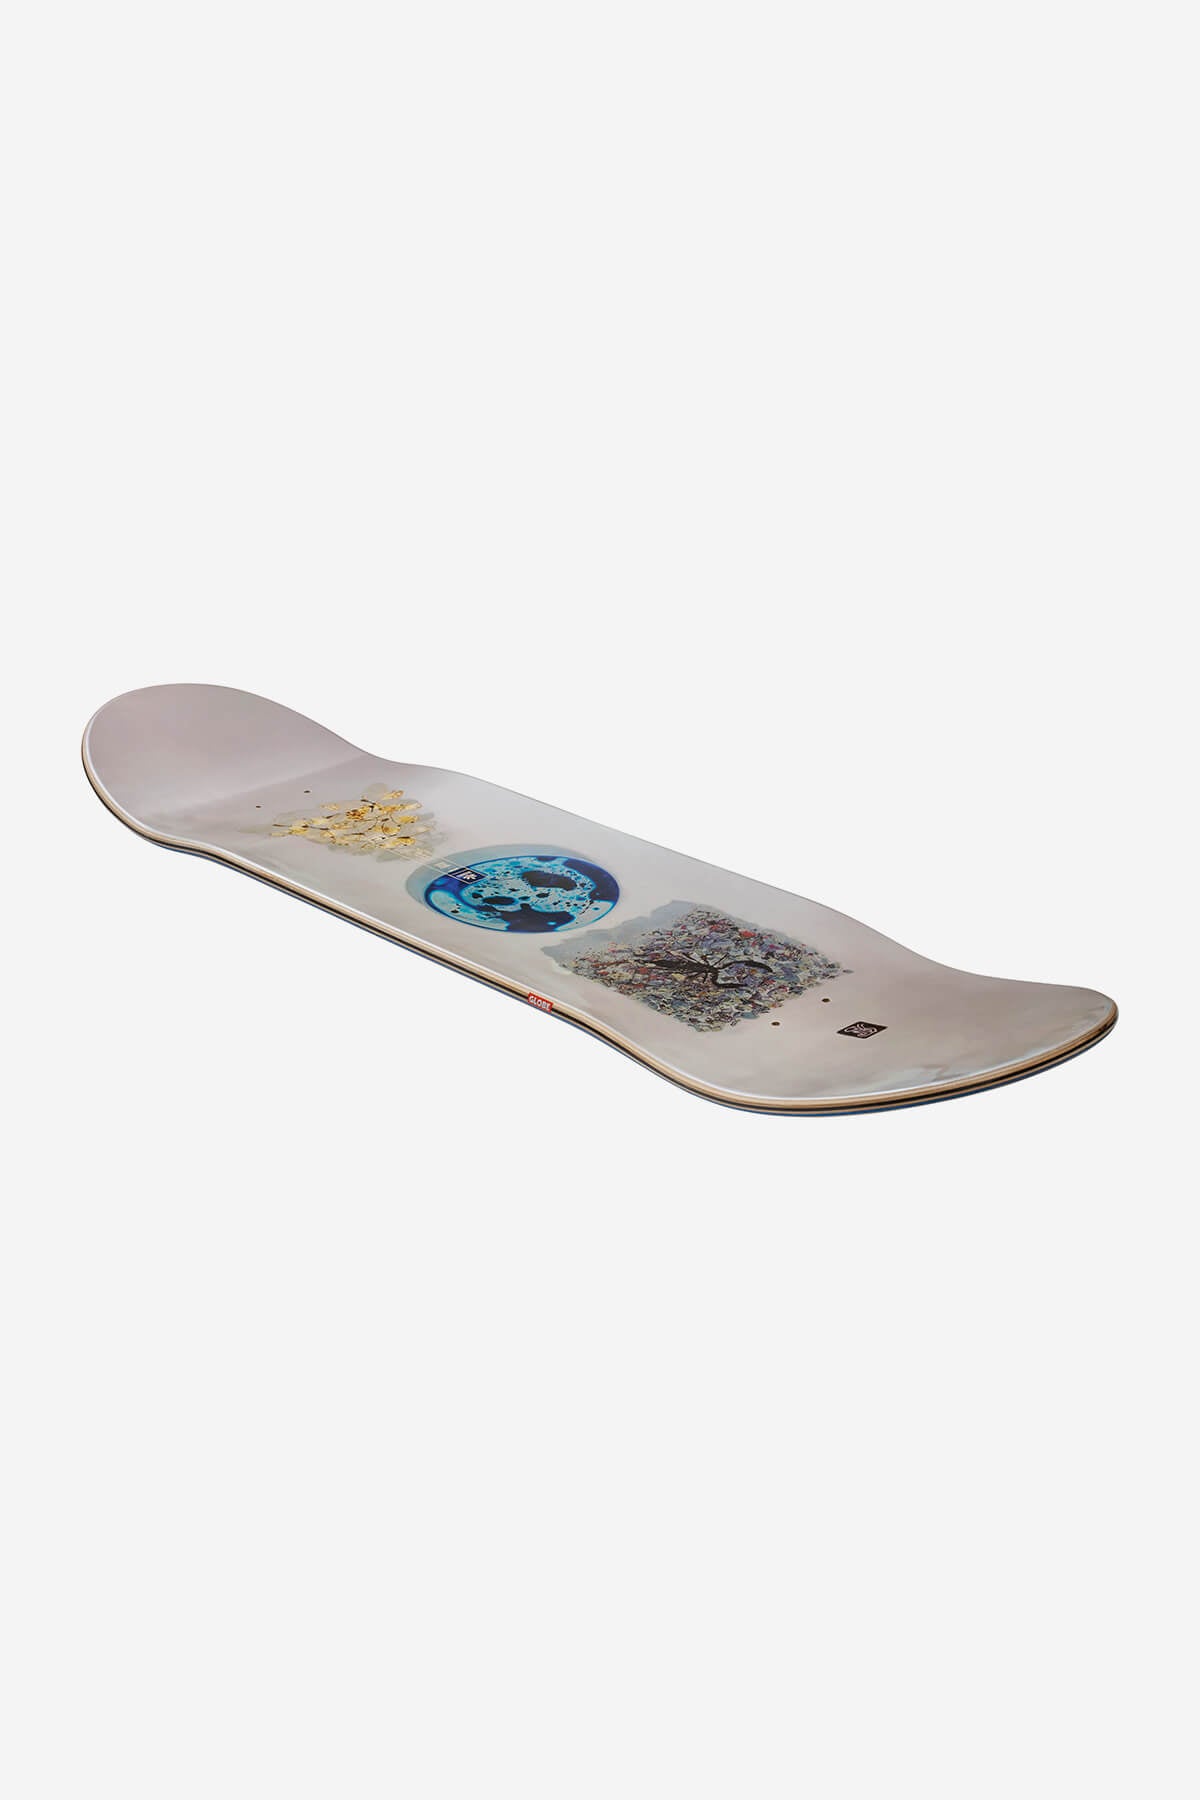 Globe - G2 Rholtsu - Stapel - 8,25" Skateboard Deck